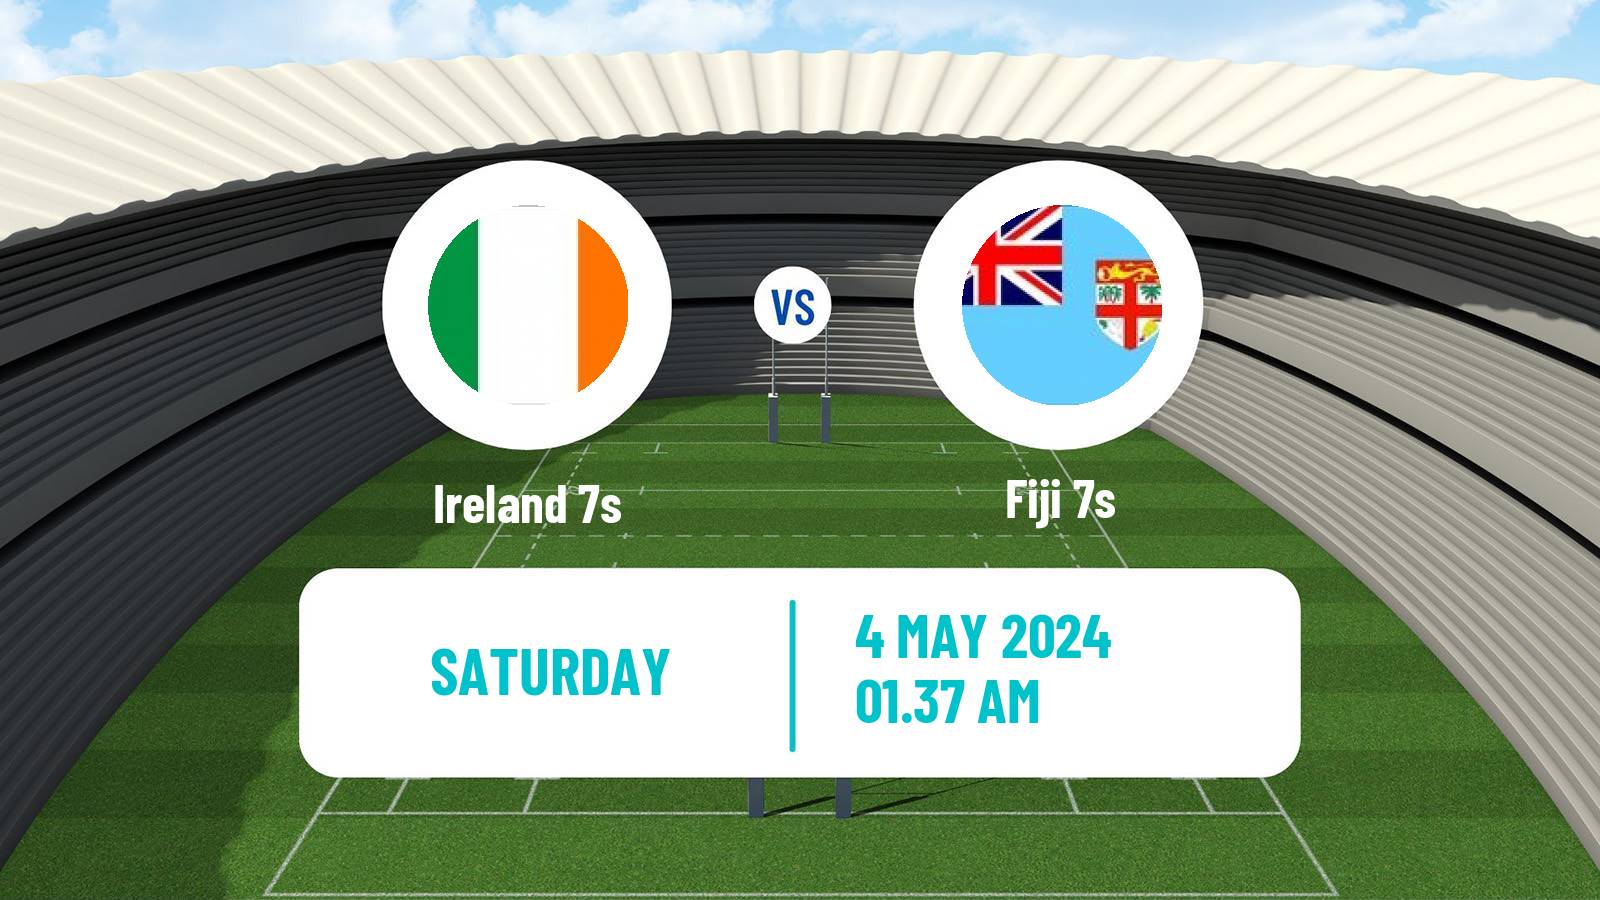 Rugby union Sevens World Series - Singapore Ireland 7s - Fiji 7s